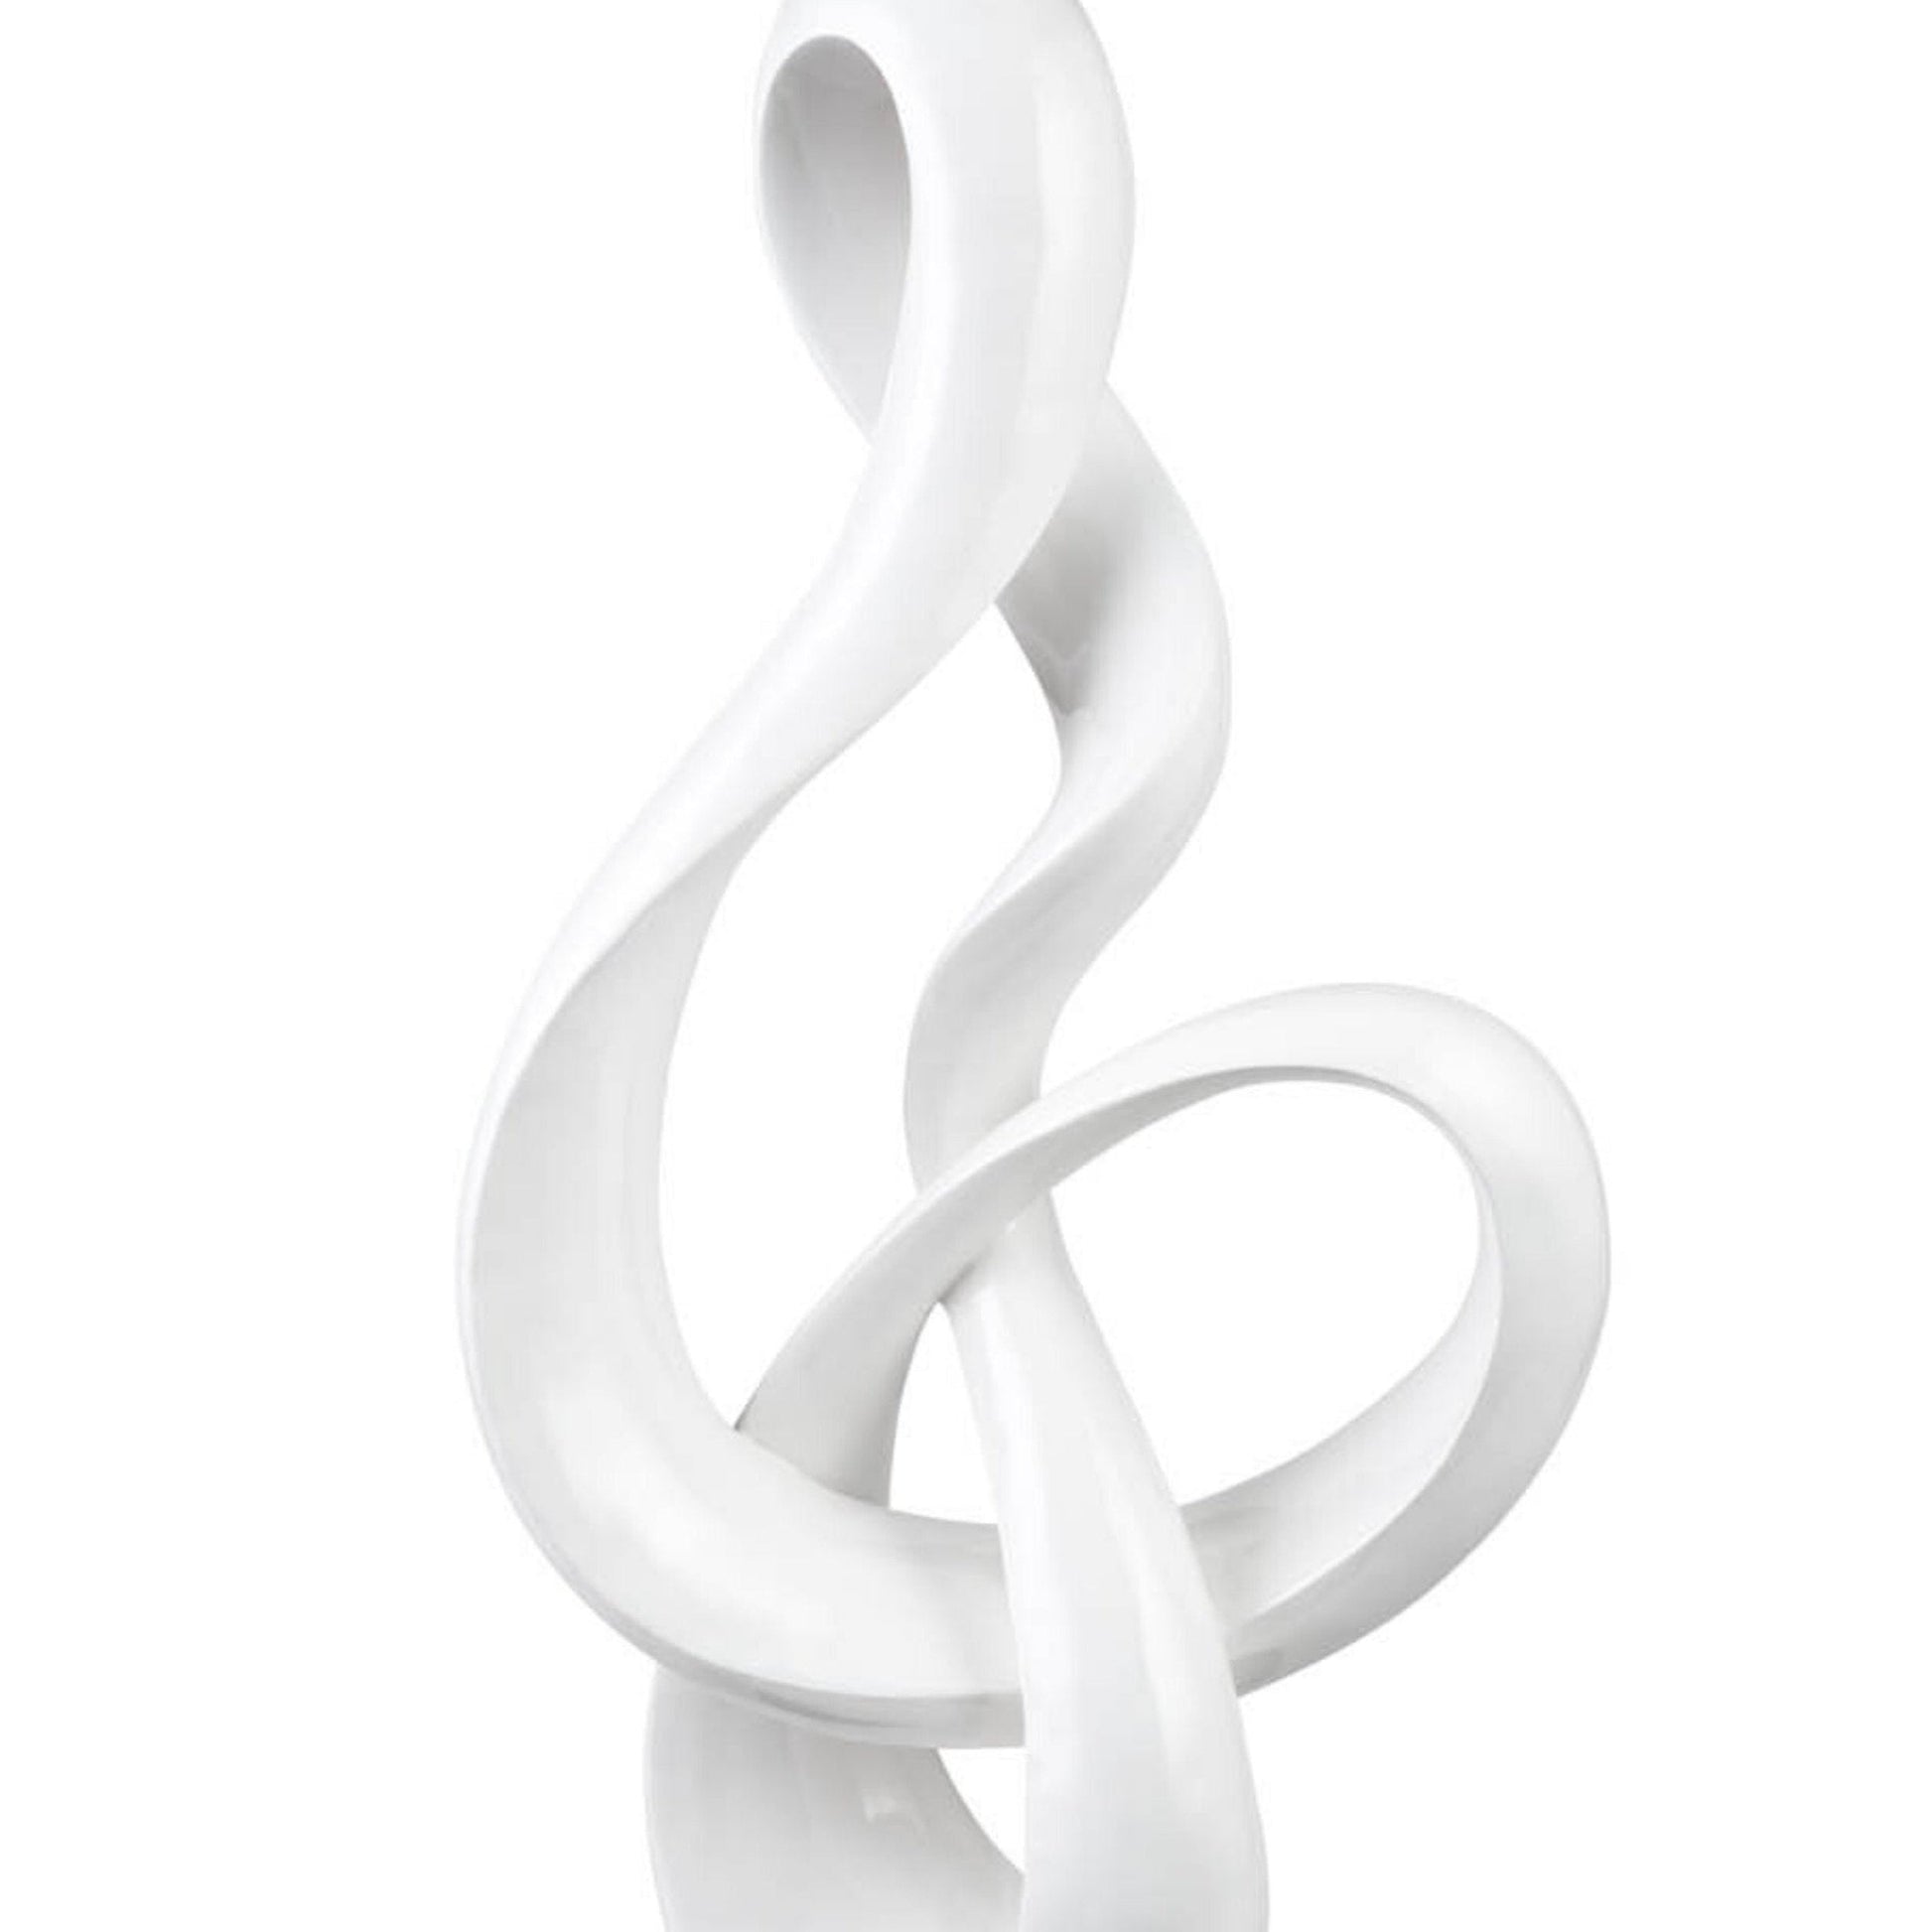 Antilia Treble Abstract Sculpture // Large White